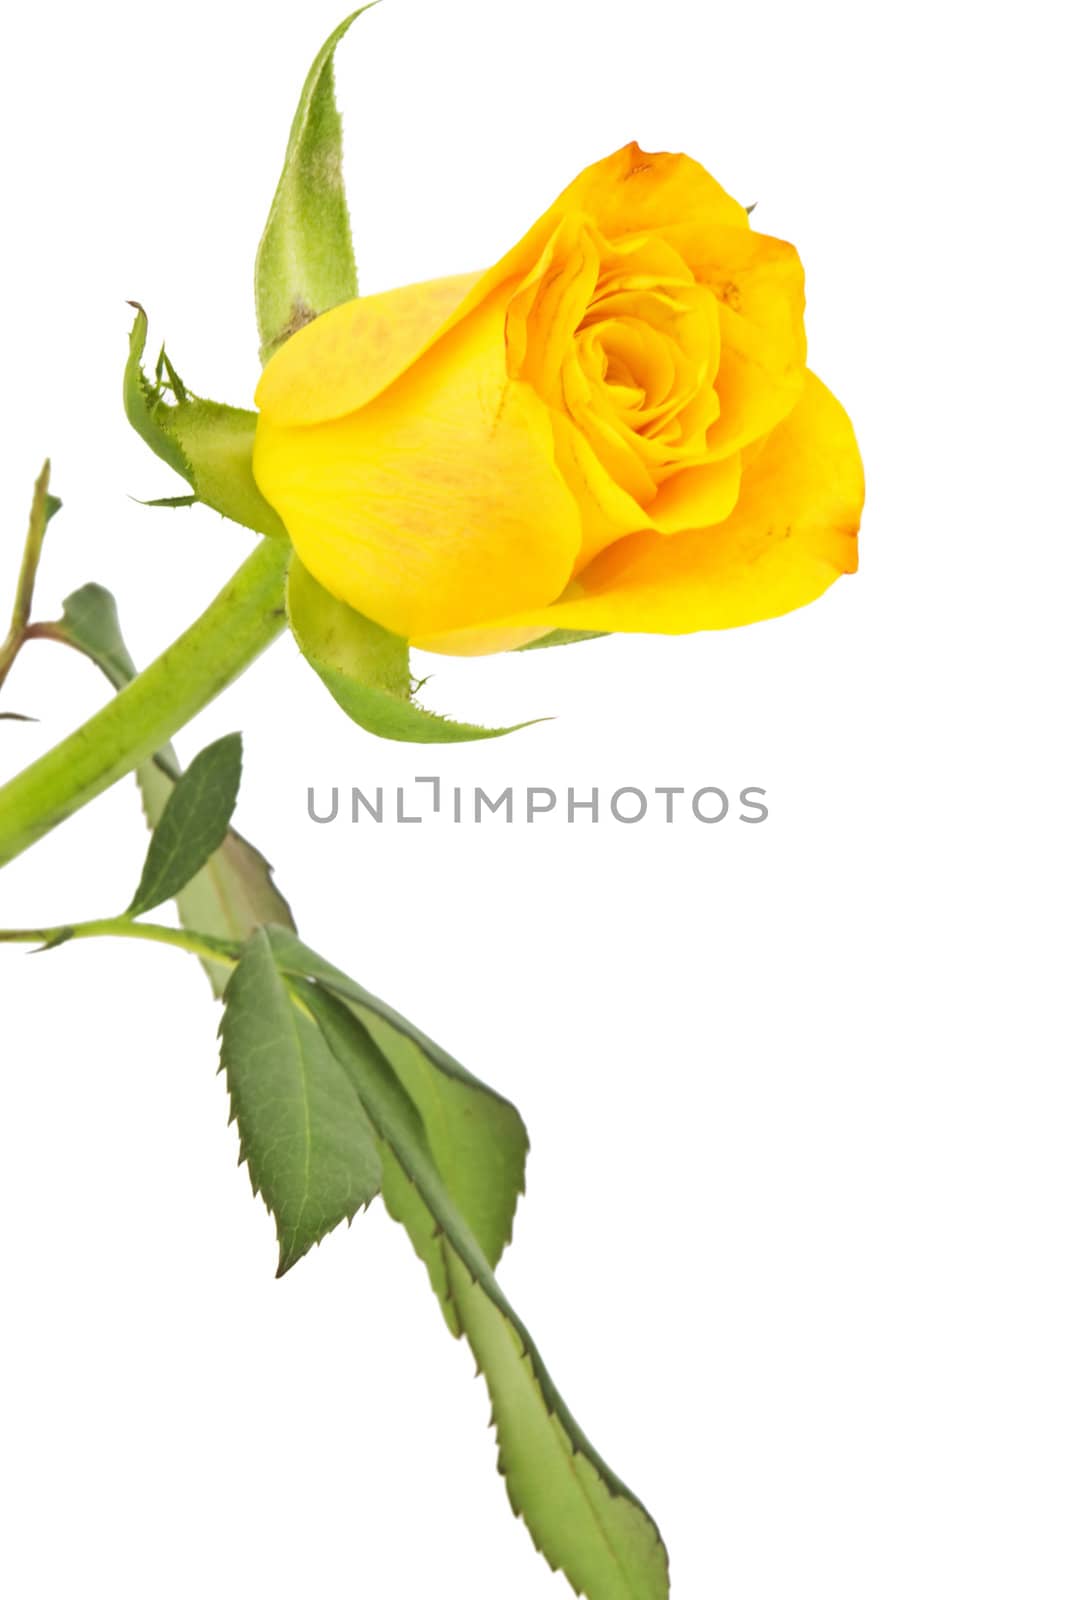 single yellow rose isolated on white